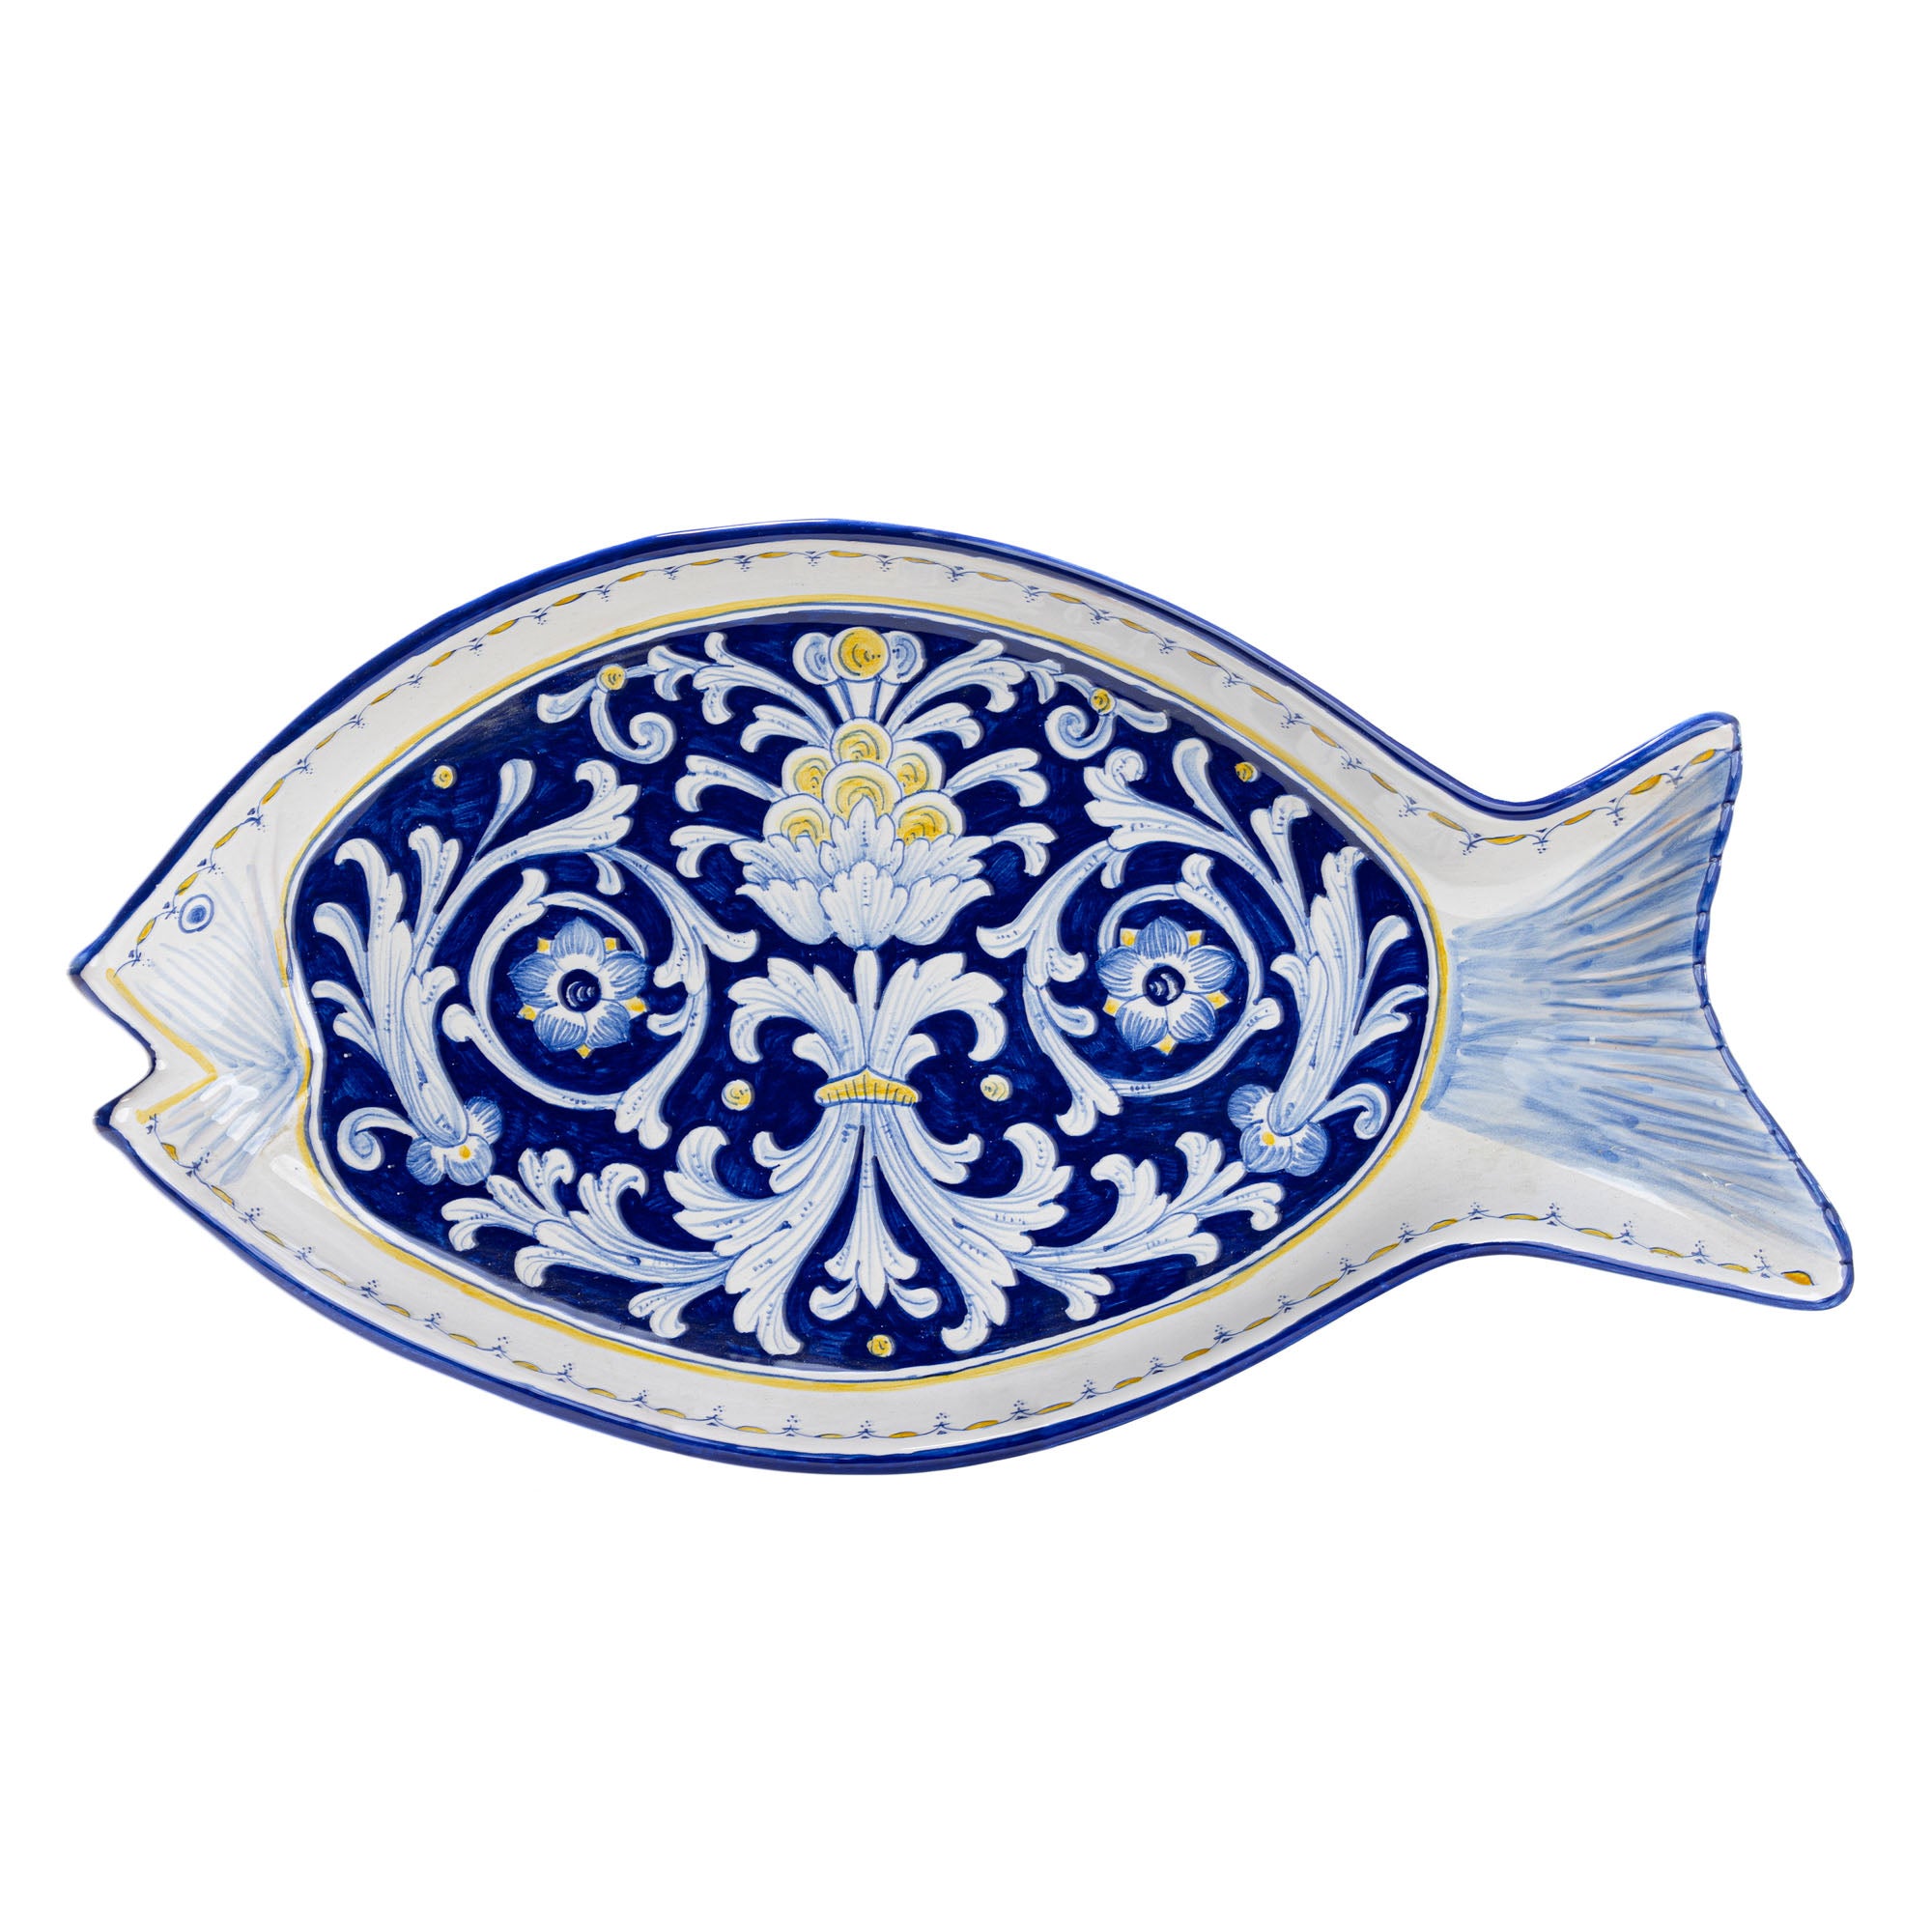 Buy Antico Deruta: Fish Platter, 18 L at Biordi Art Imports